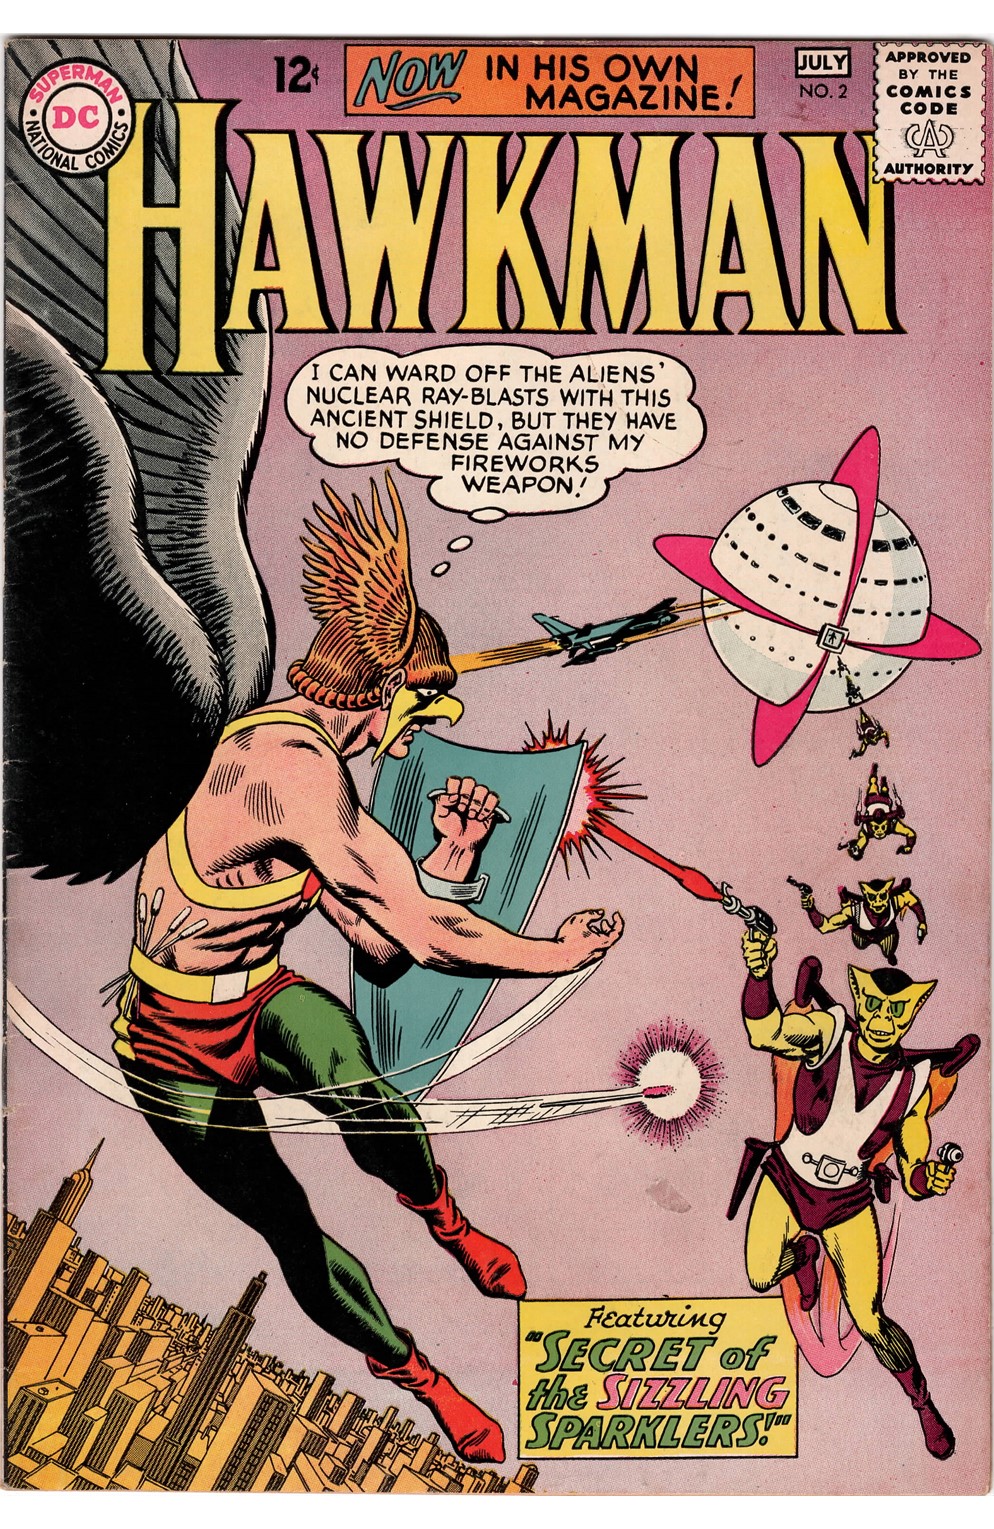 Hawkman #02